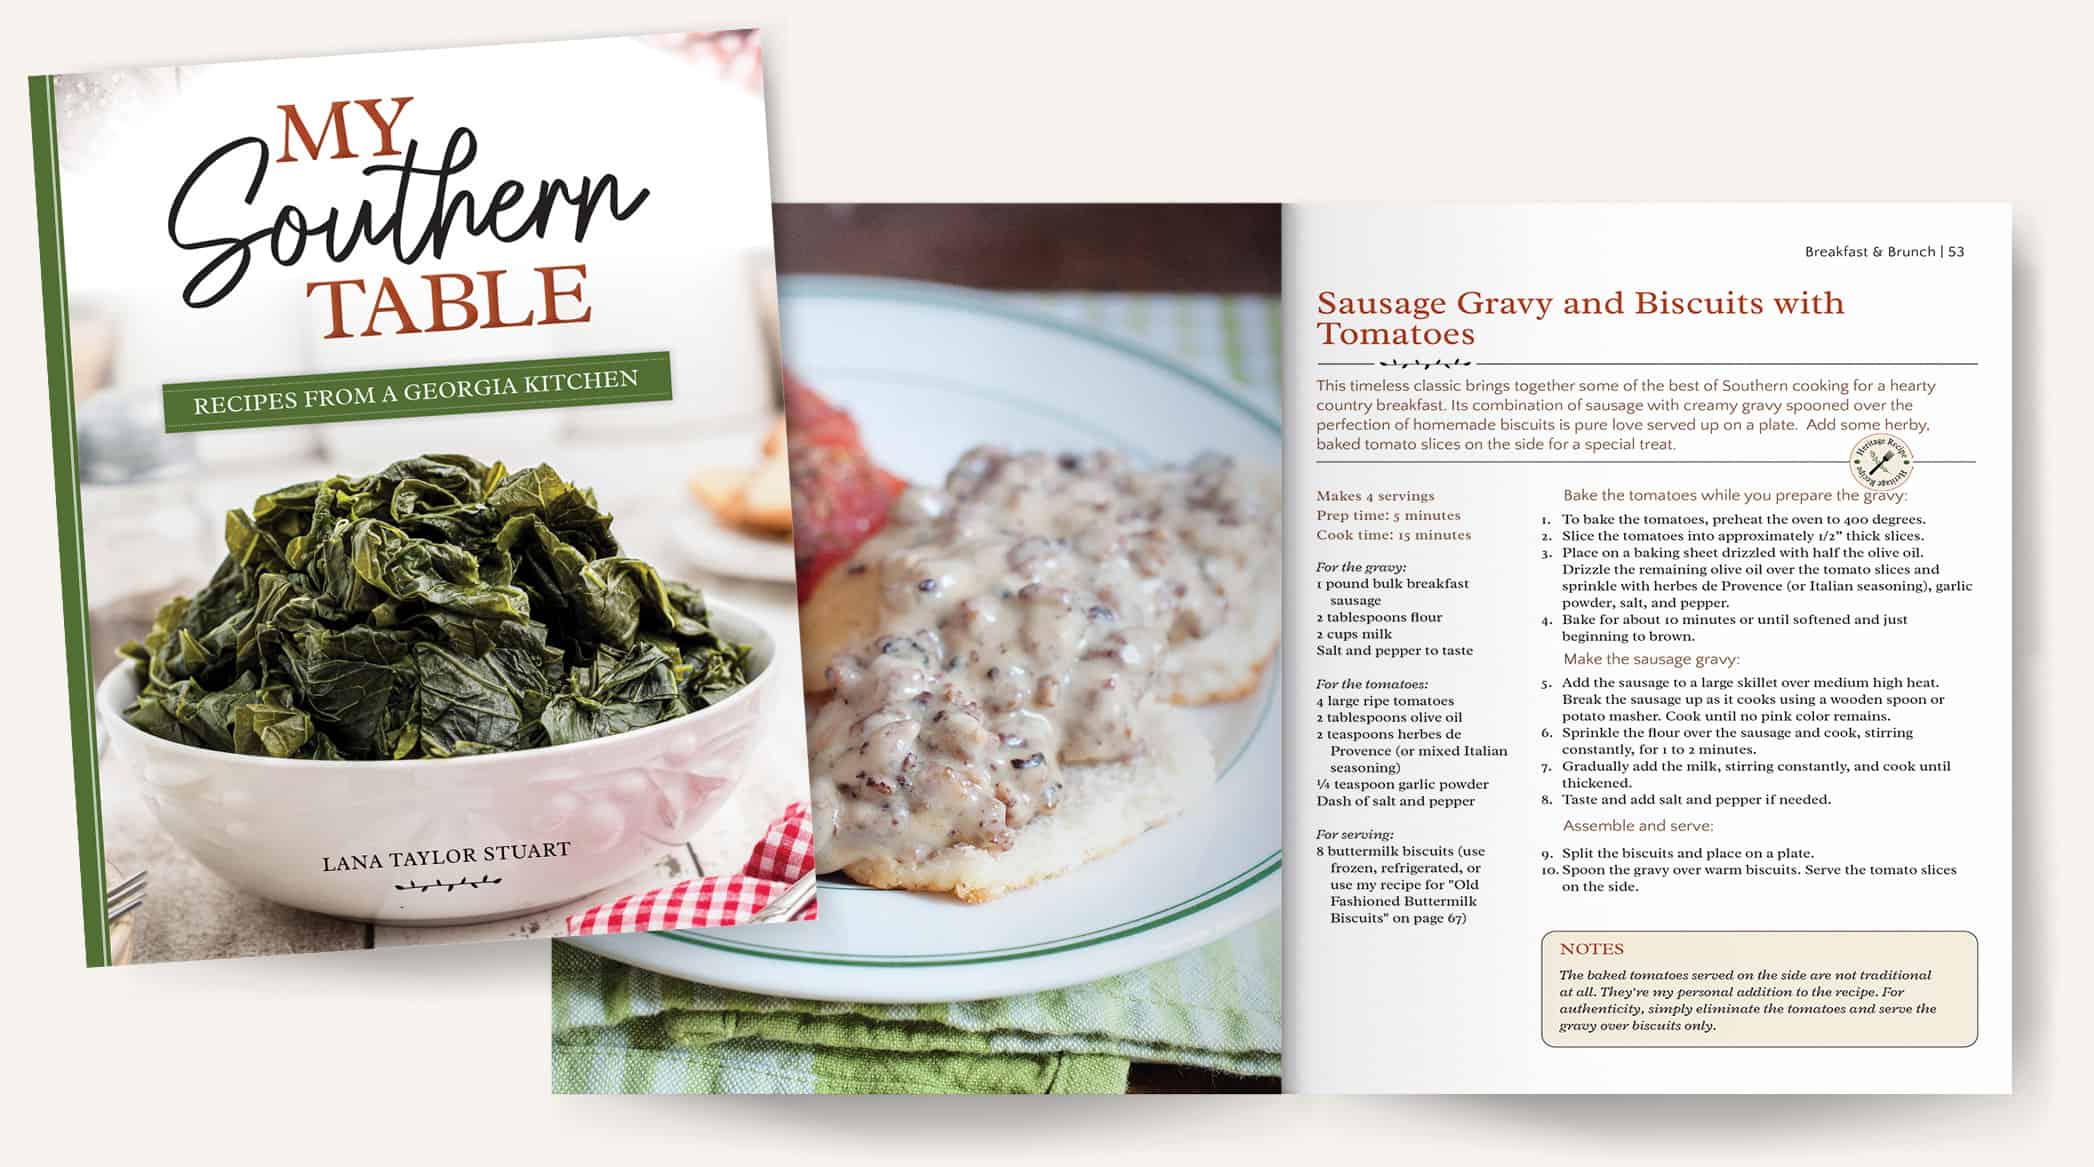 Cookbook mockup showing pages 52-53.